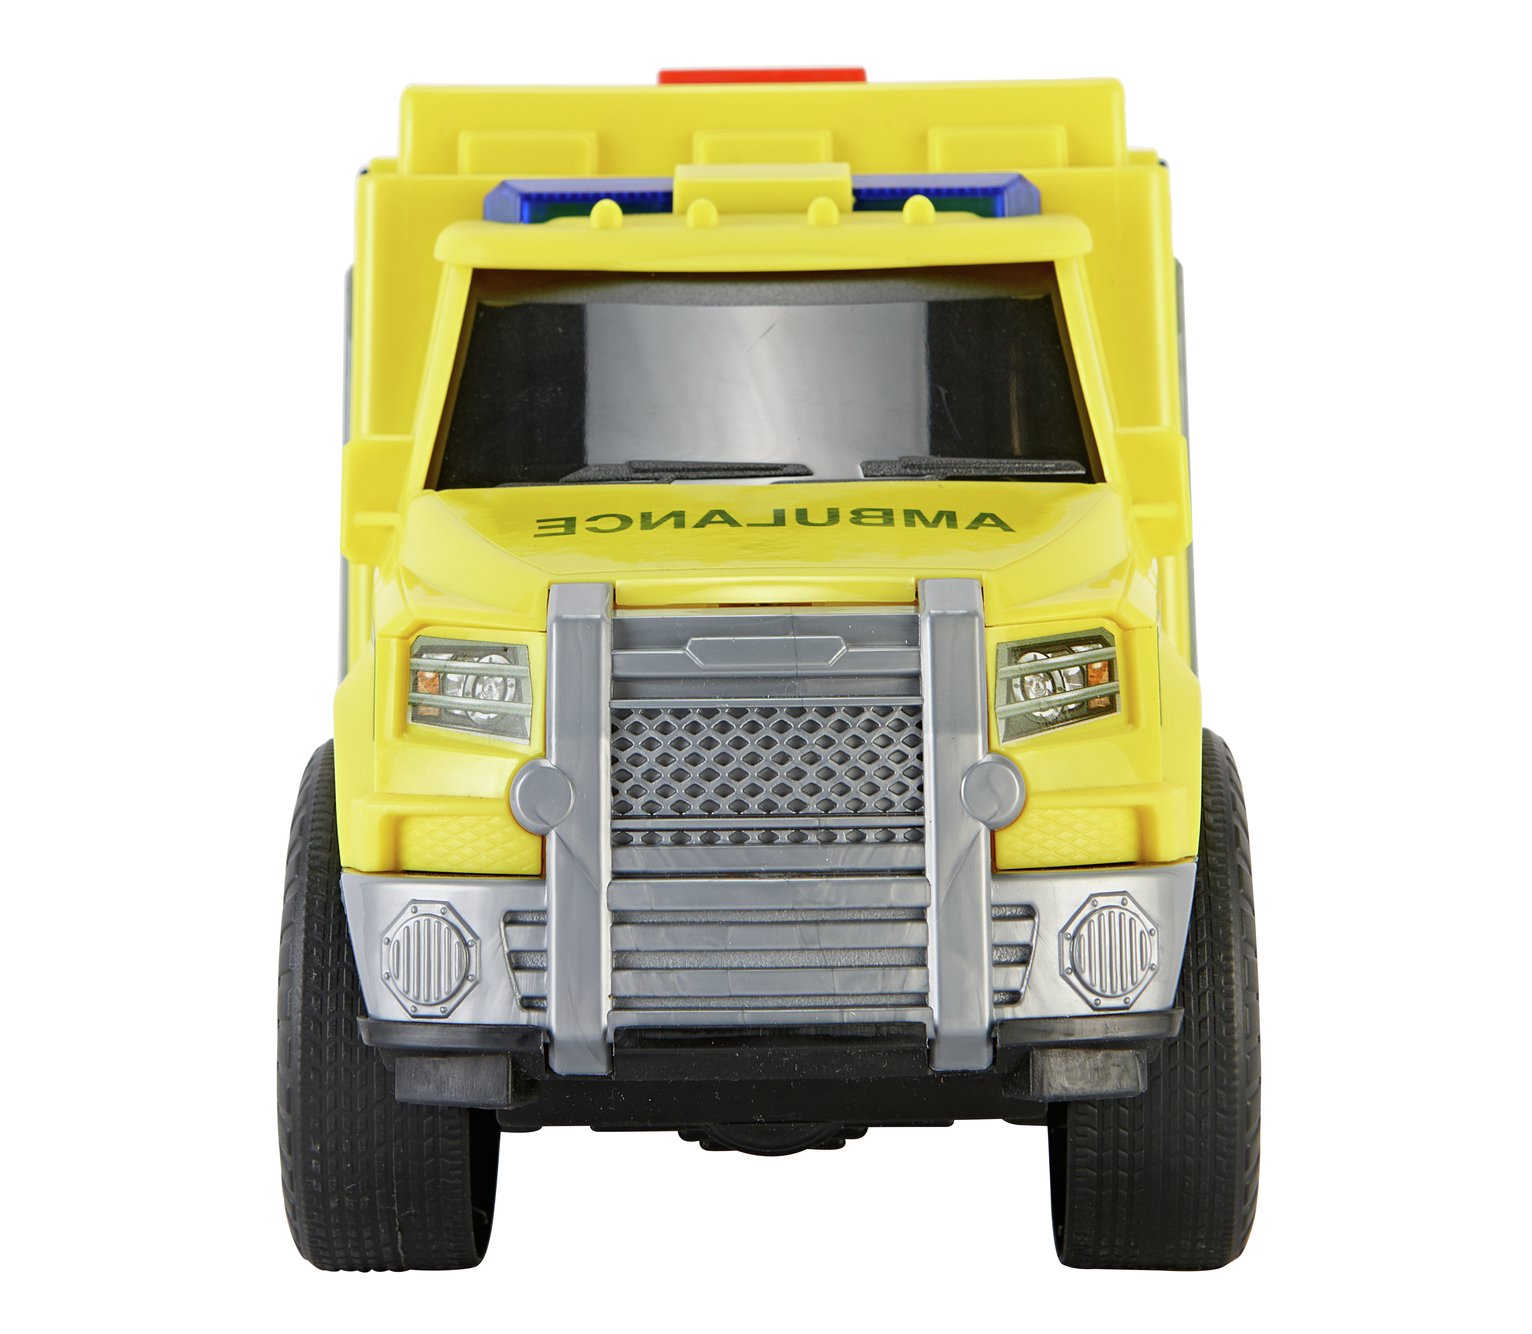 argos ambulance toy